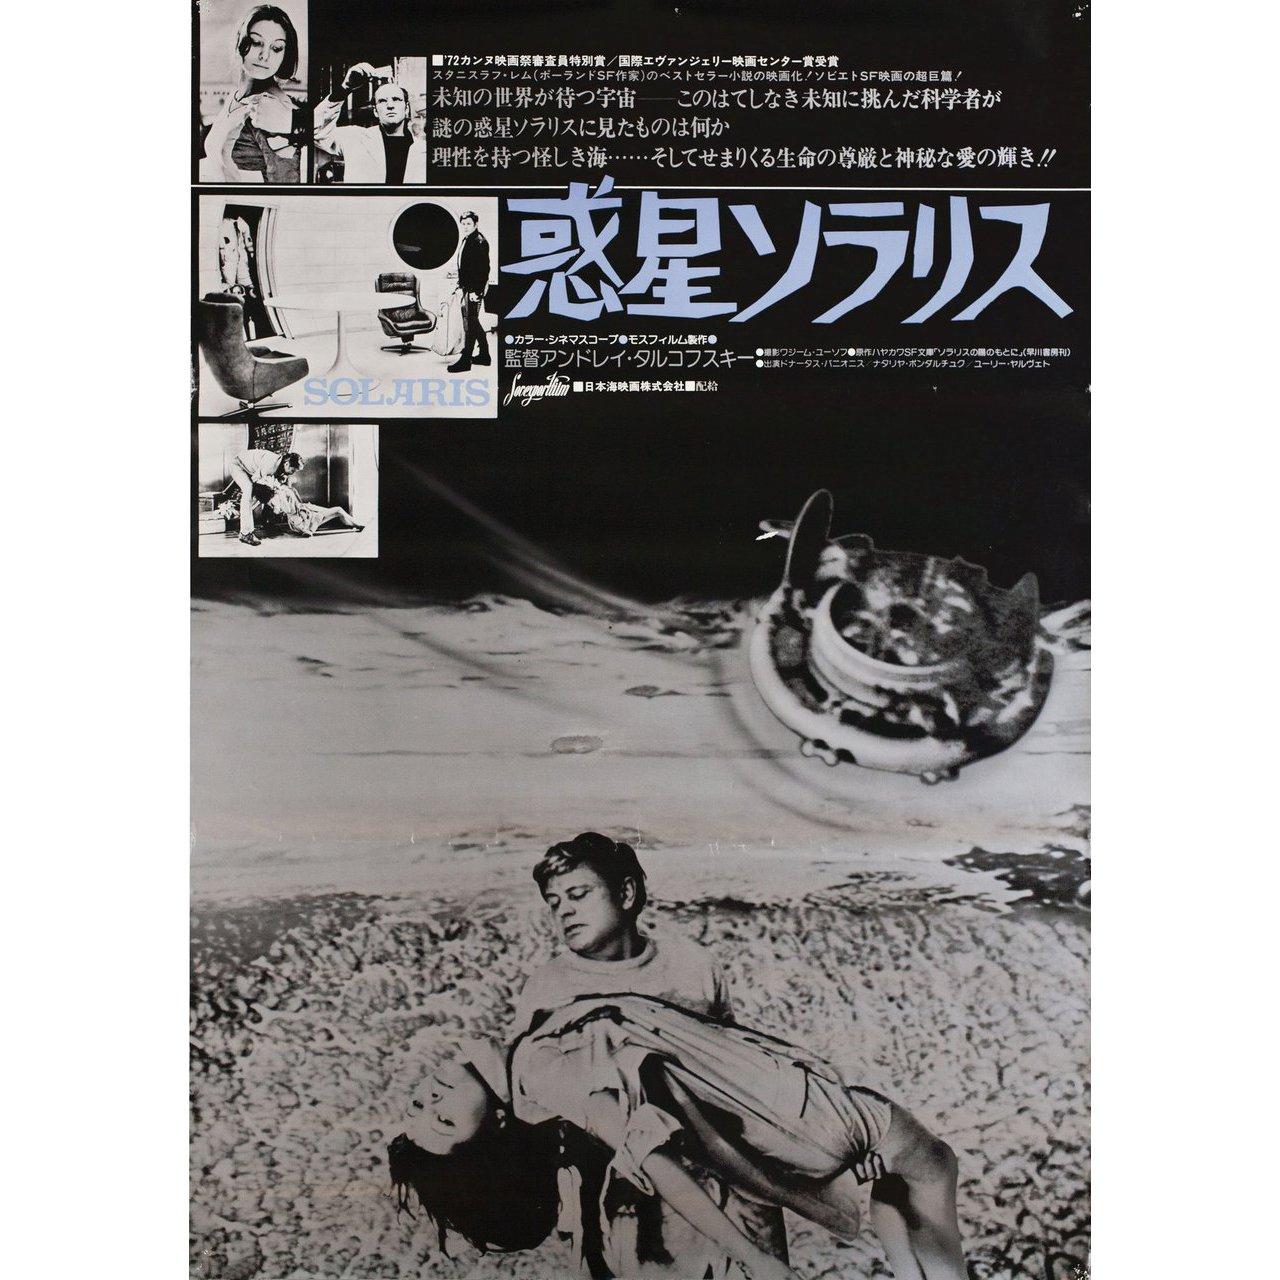 Original 1977 Japanese B2 poster for the first Japanese theatrical release of the 1972 film Solaris directed by Andrei Tarkovsky with Natalya Bondarchuk / Donatas Banionis / Juri Jarvet / Vladislav Dvorzhetskiy. Very Good condition, tri-fold wtih